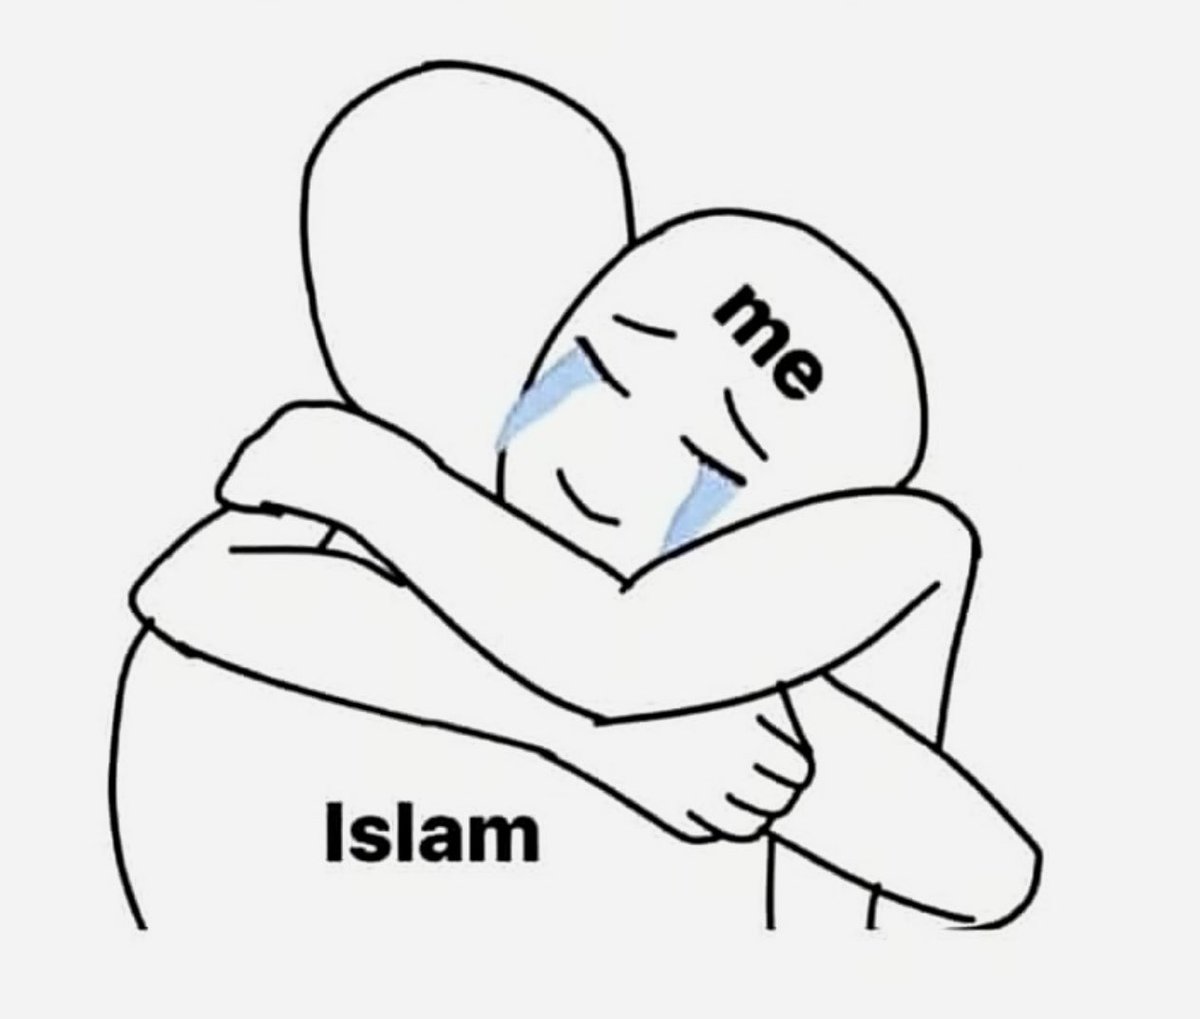 Me and Islam